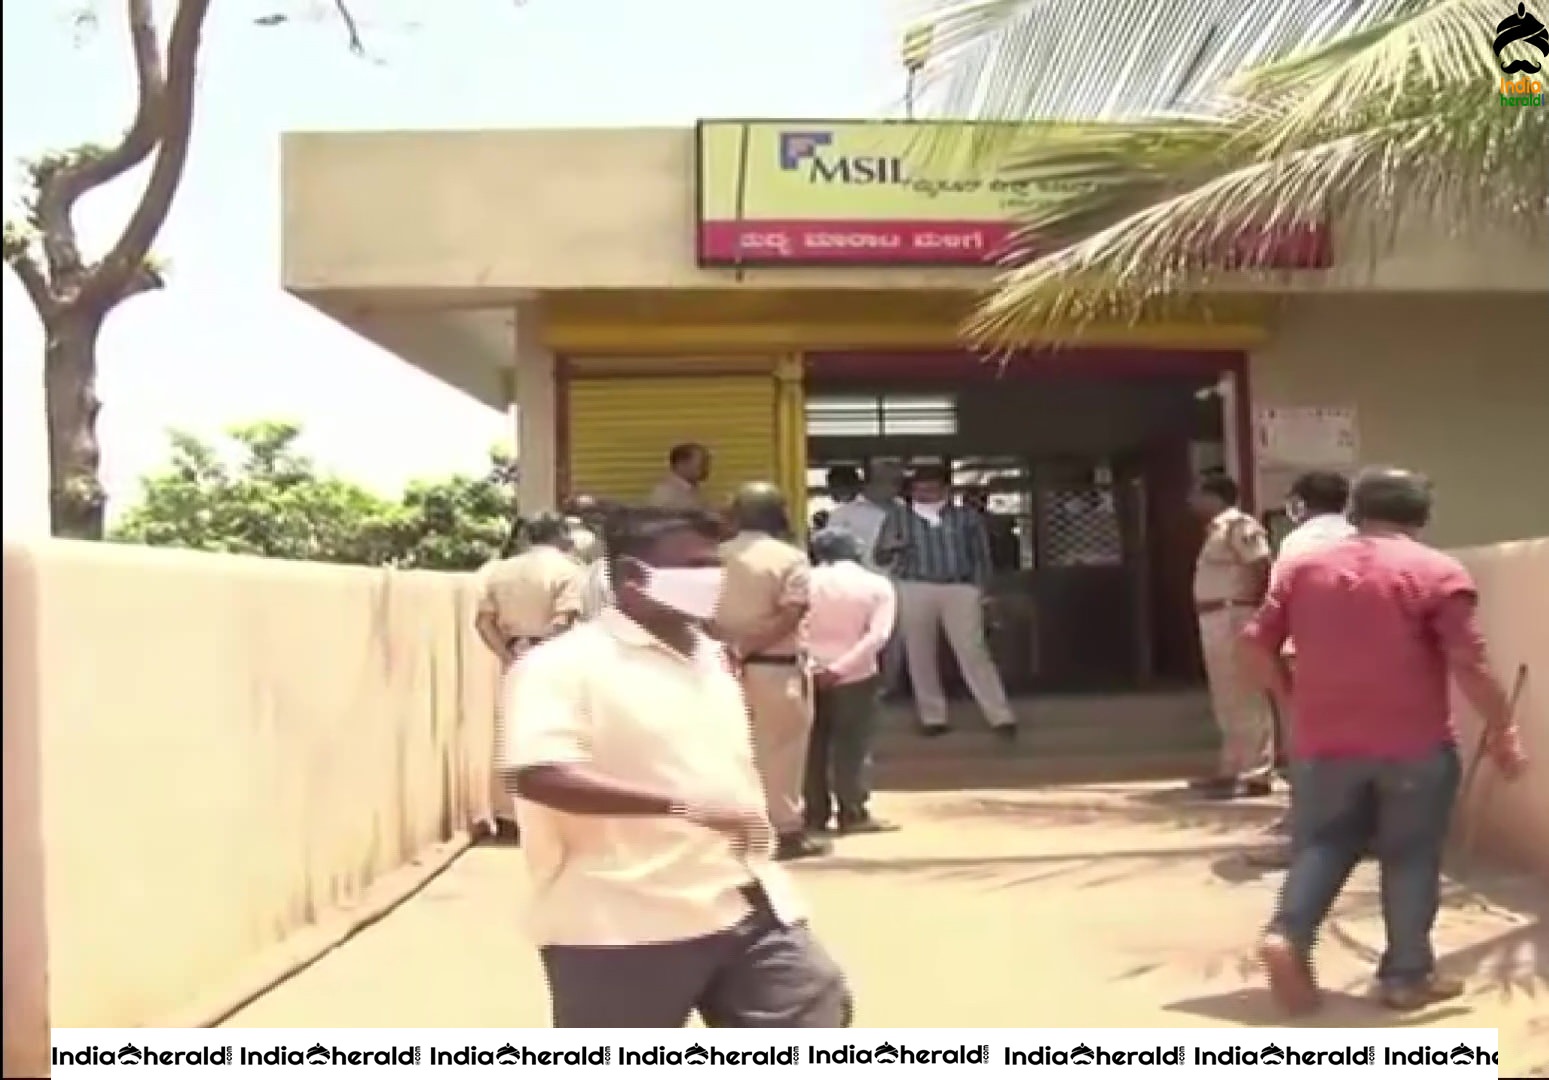 Liquor worth 2 Lakhs looted from a liquor shop in Karnataka amid Corona Virus lockdown